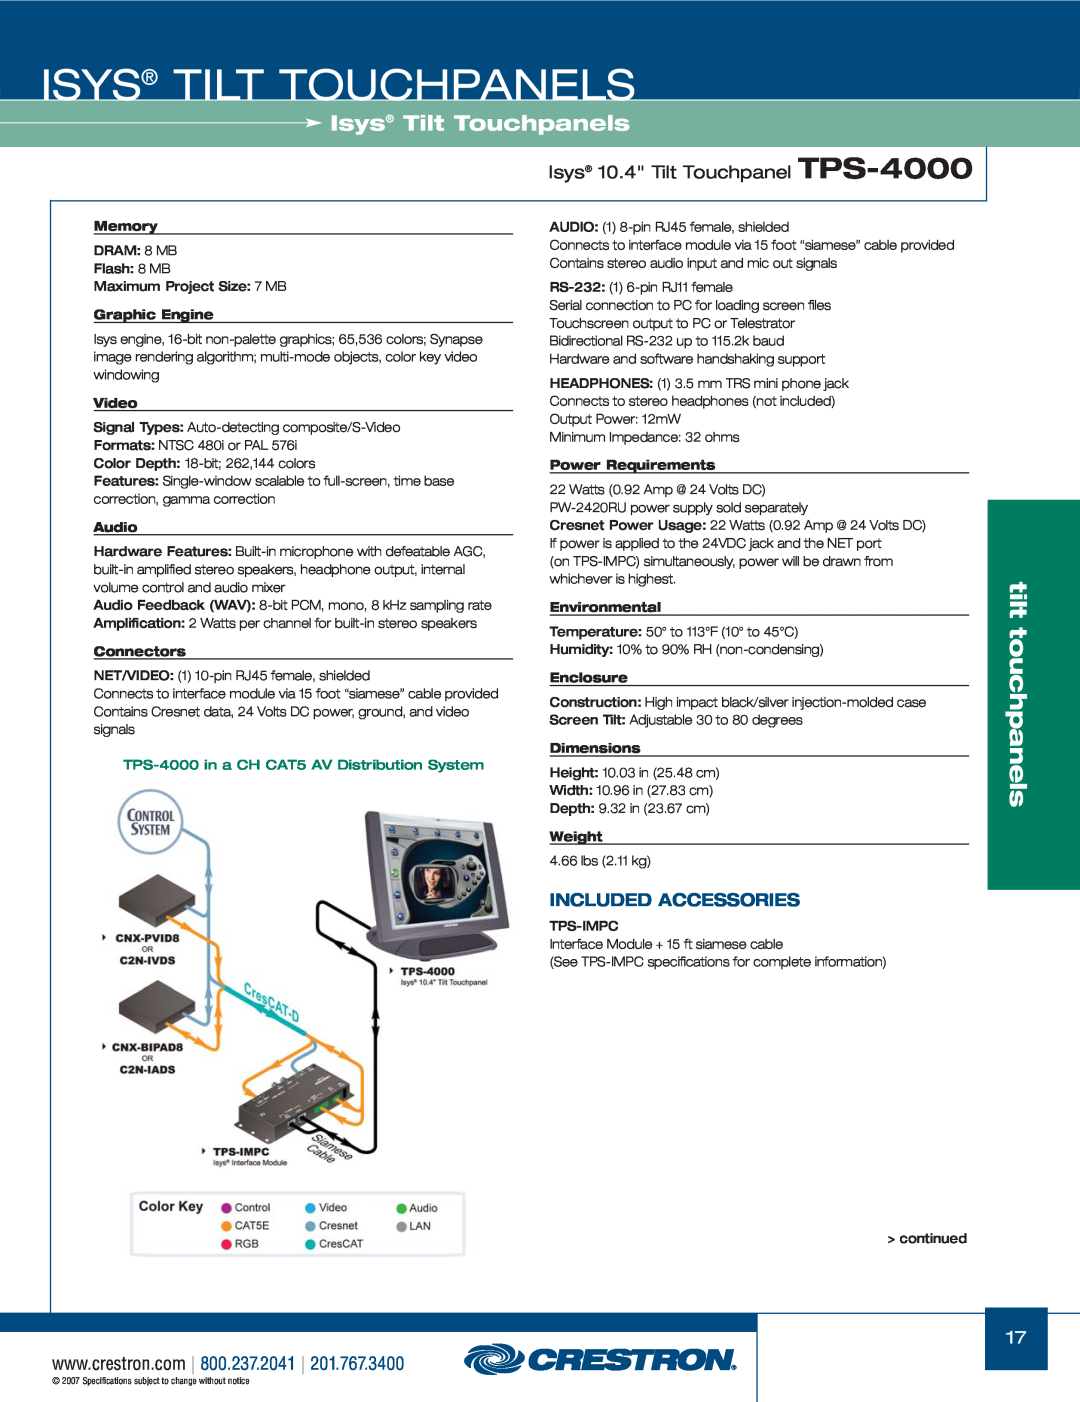 Crestron electronic TPS Series Isys 10.4 Tilt Touchpanel TPS-4000, Isys Tilt Touchpanels, tilt touchpanels, Memory, Video 